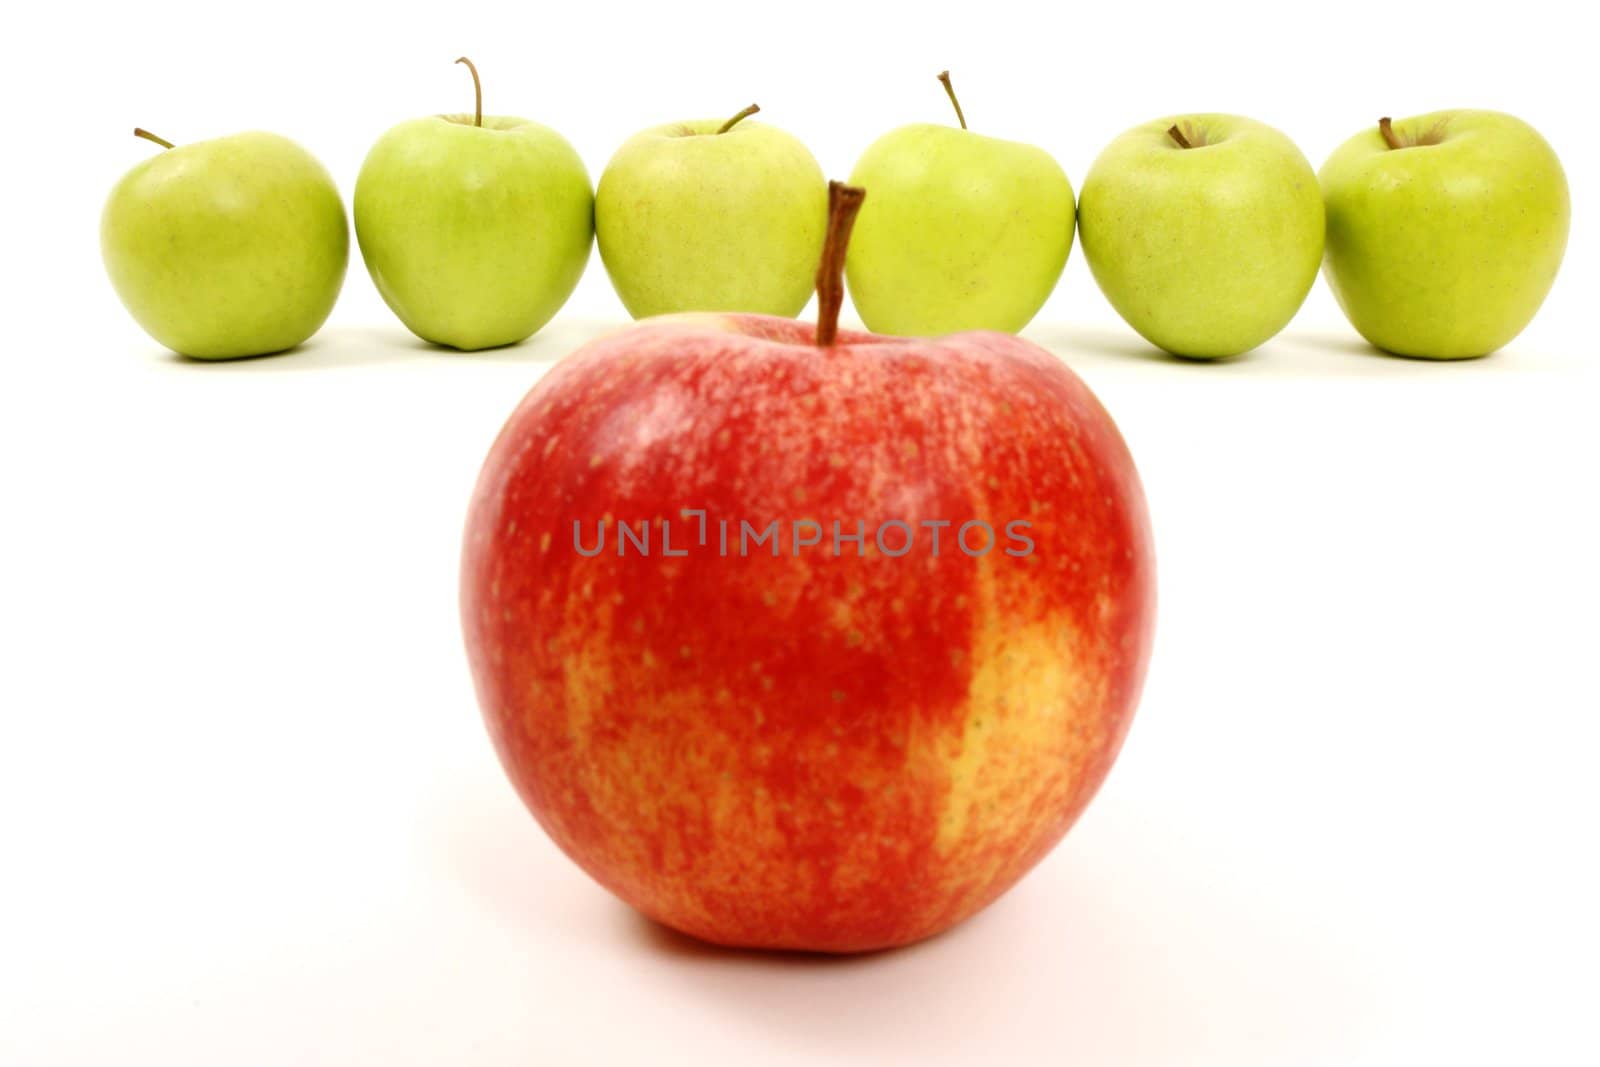 apples arranged on a white background to symbolize teamwork, leadership, discrimination............